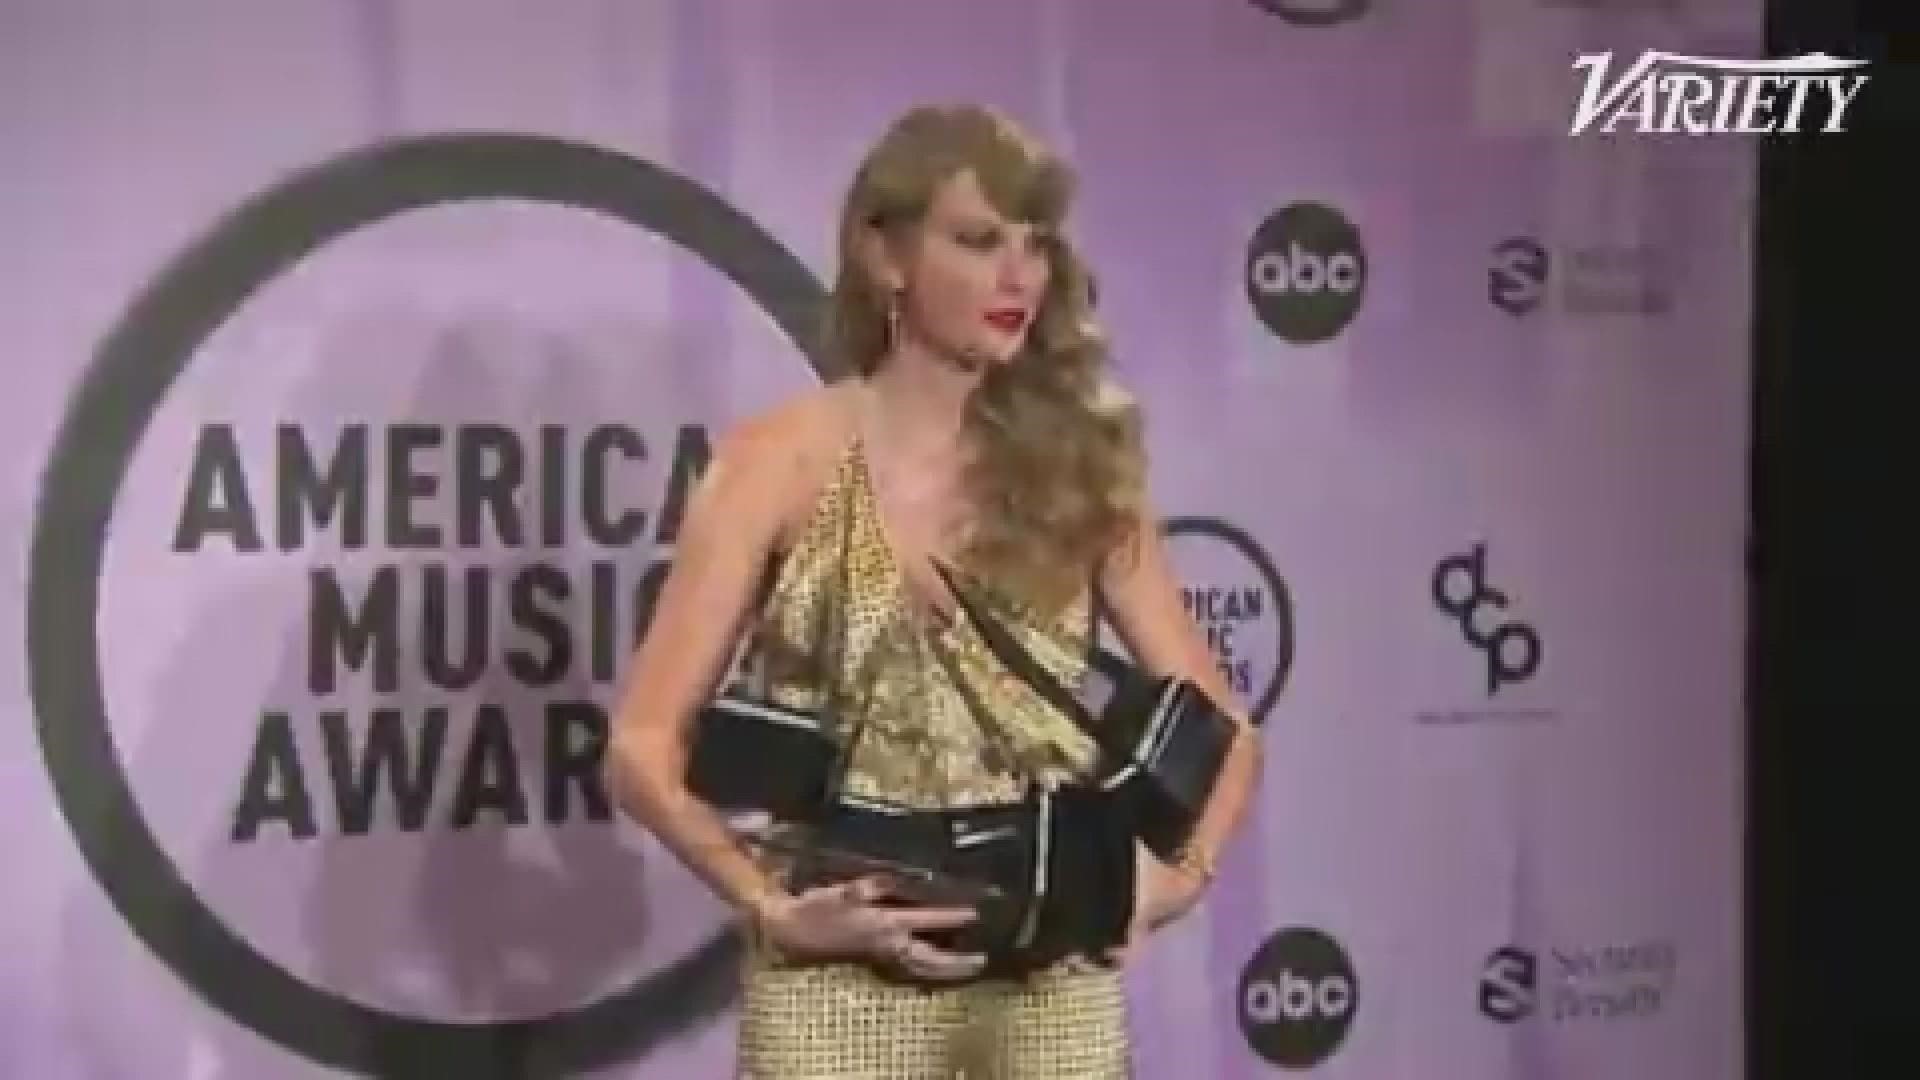 Taylor Swift won 6 awards at Sunday night's AMAs - see how the Texas Today anchors react.